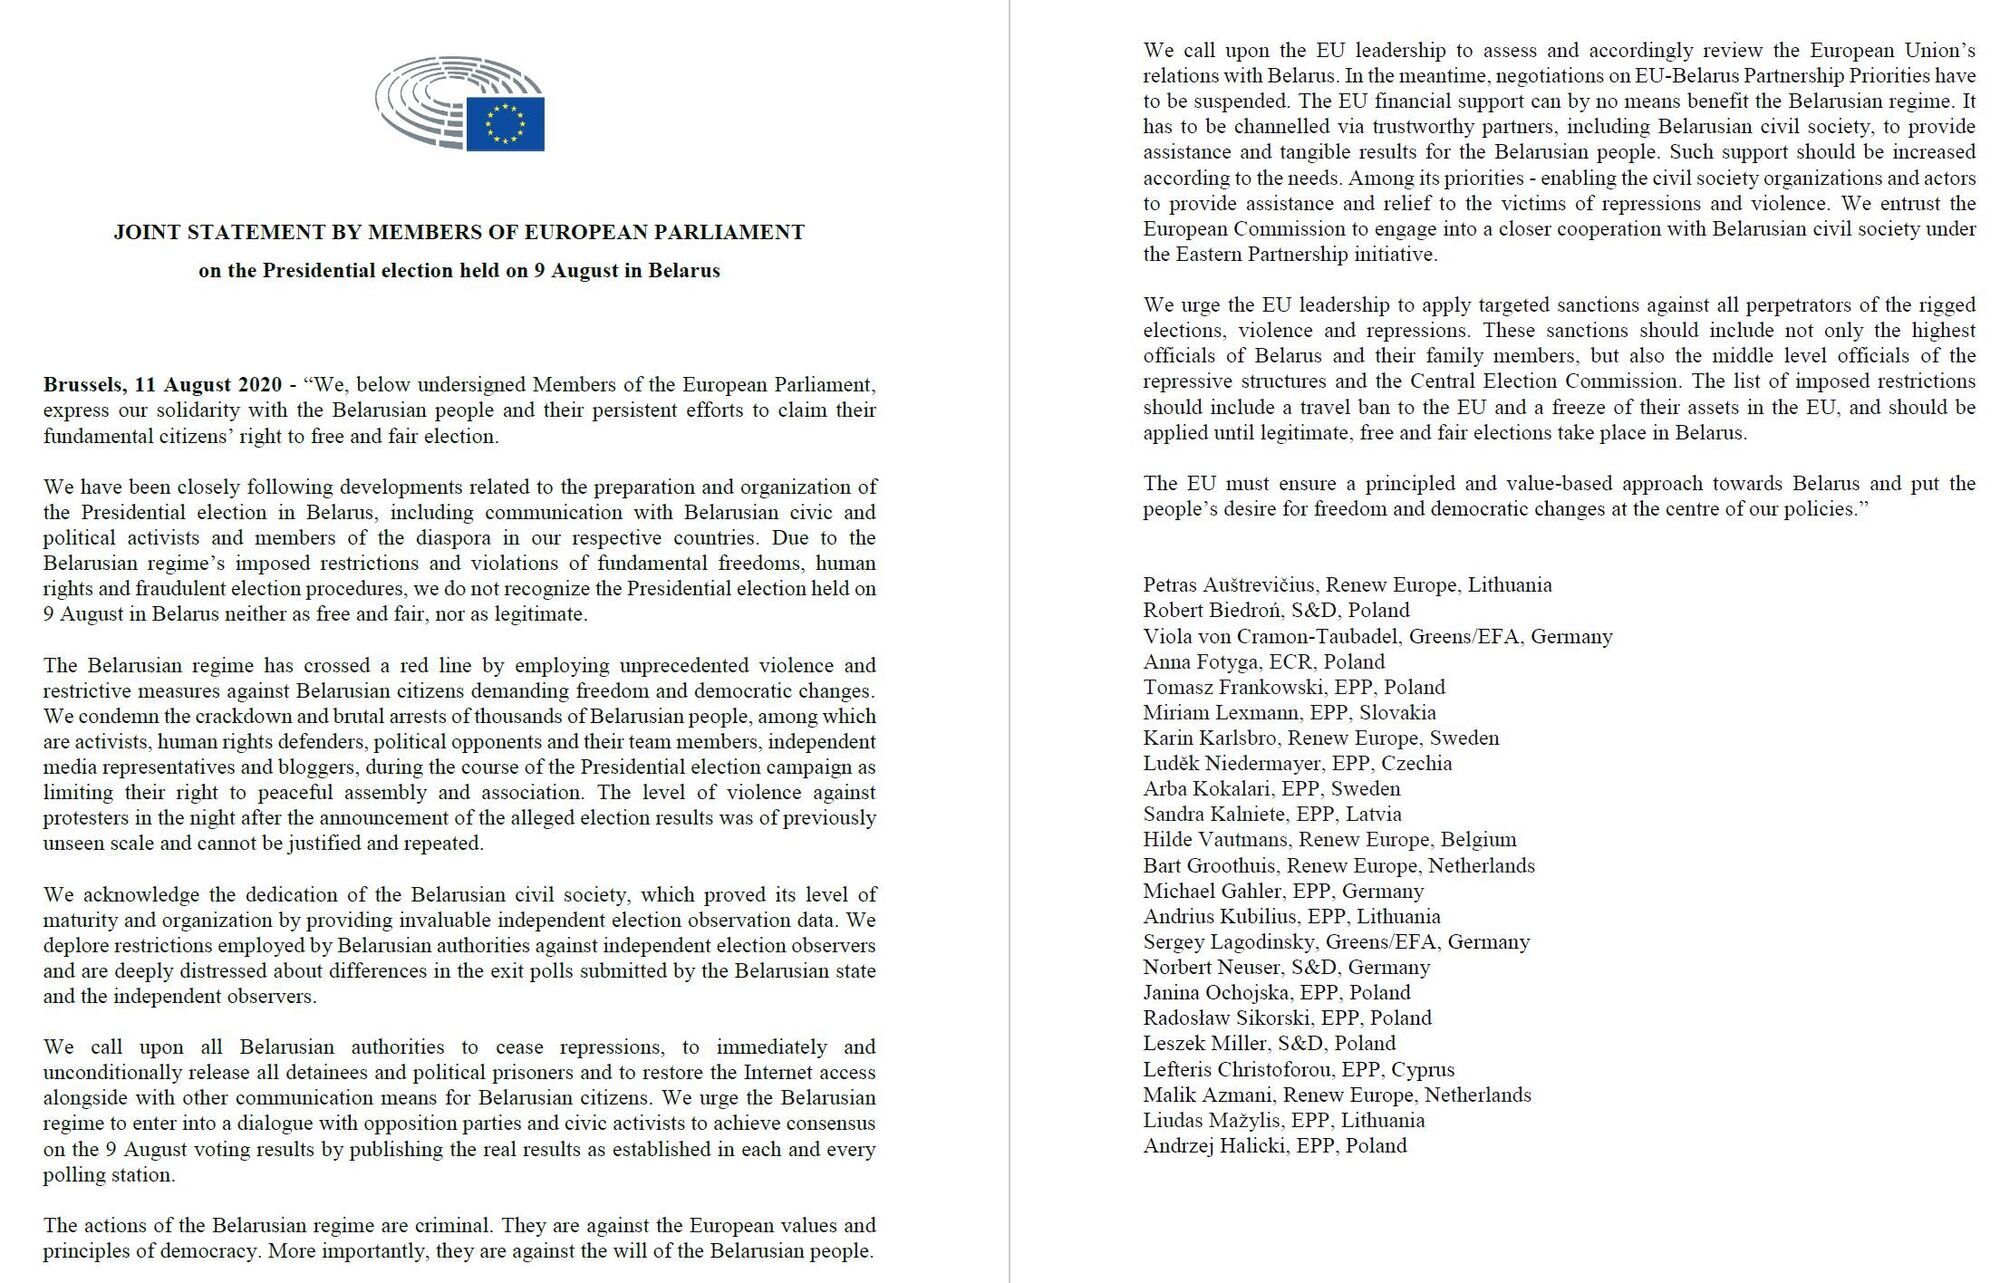 Текст заявления Европейского парламента.